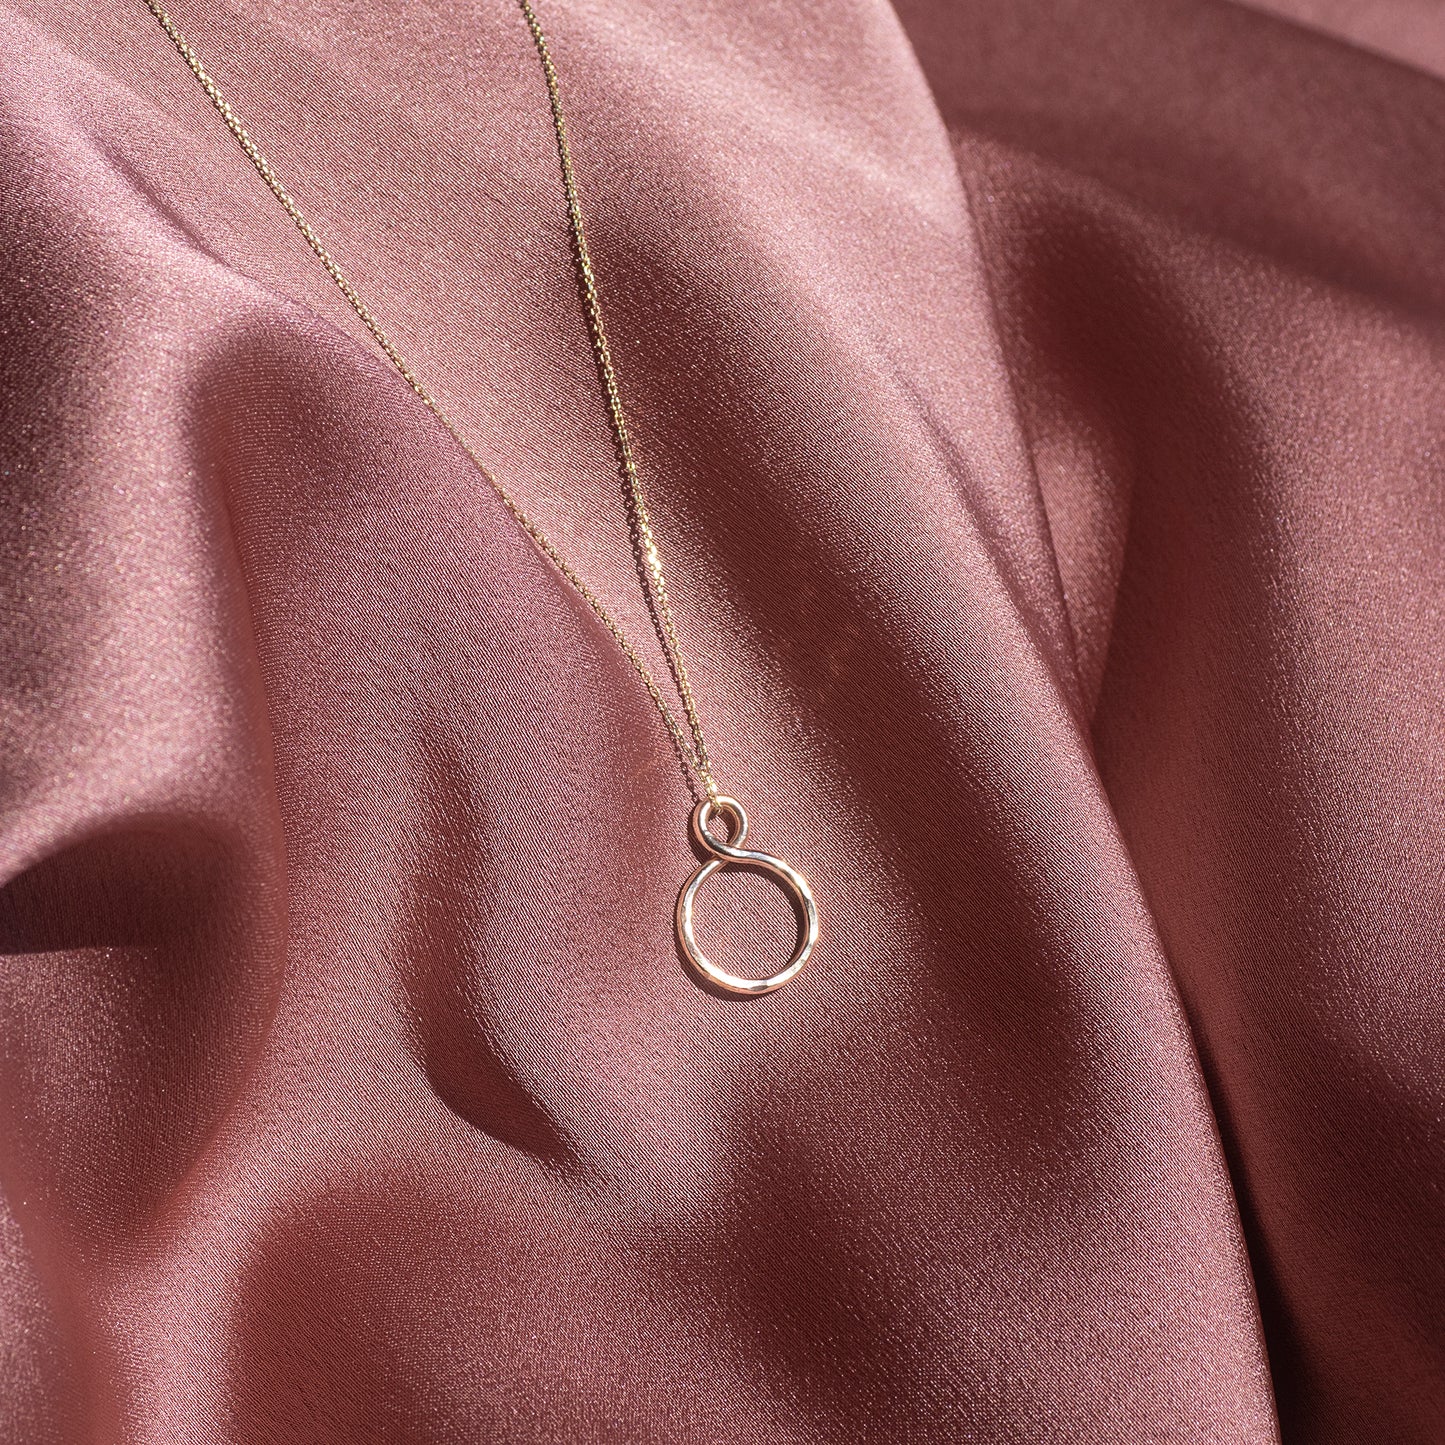 Bat Mitzvah Gift - Petite Infinity Necklace - 9kt Gold